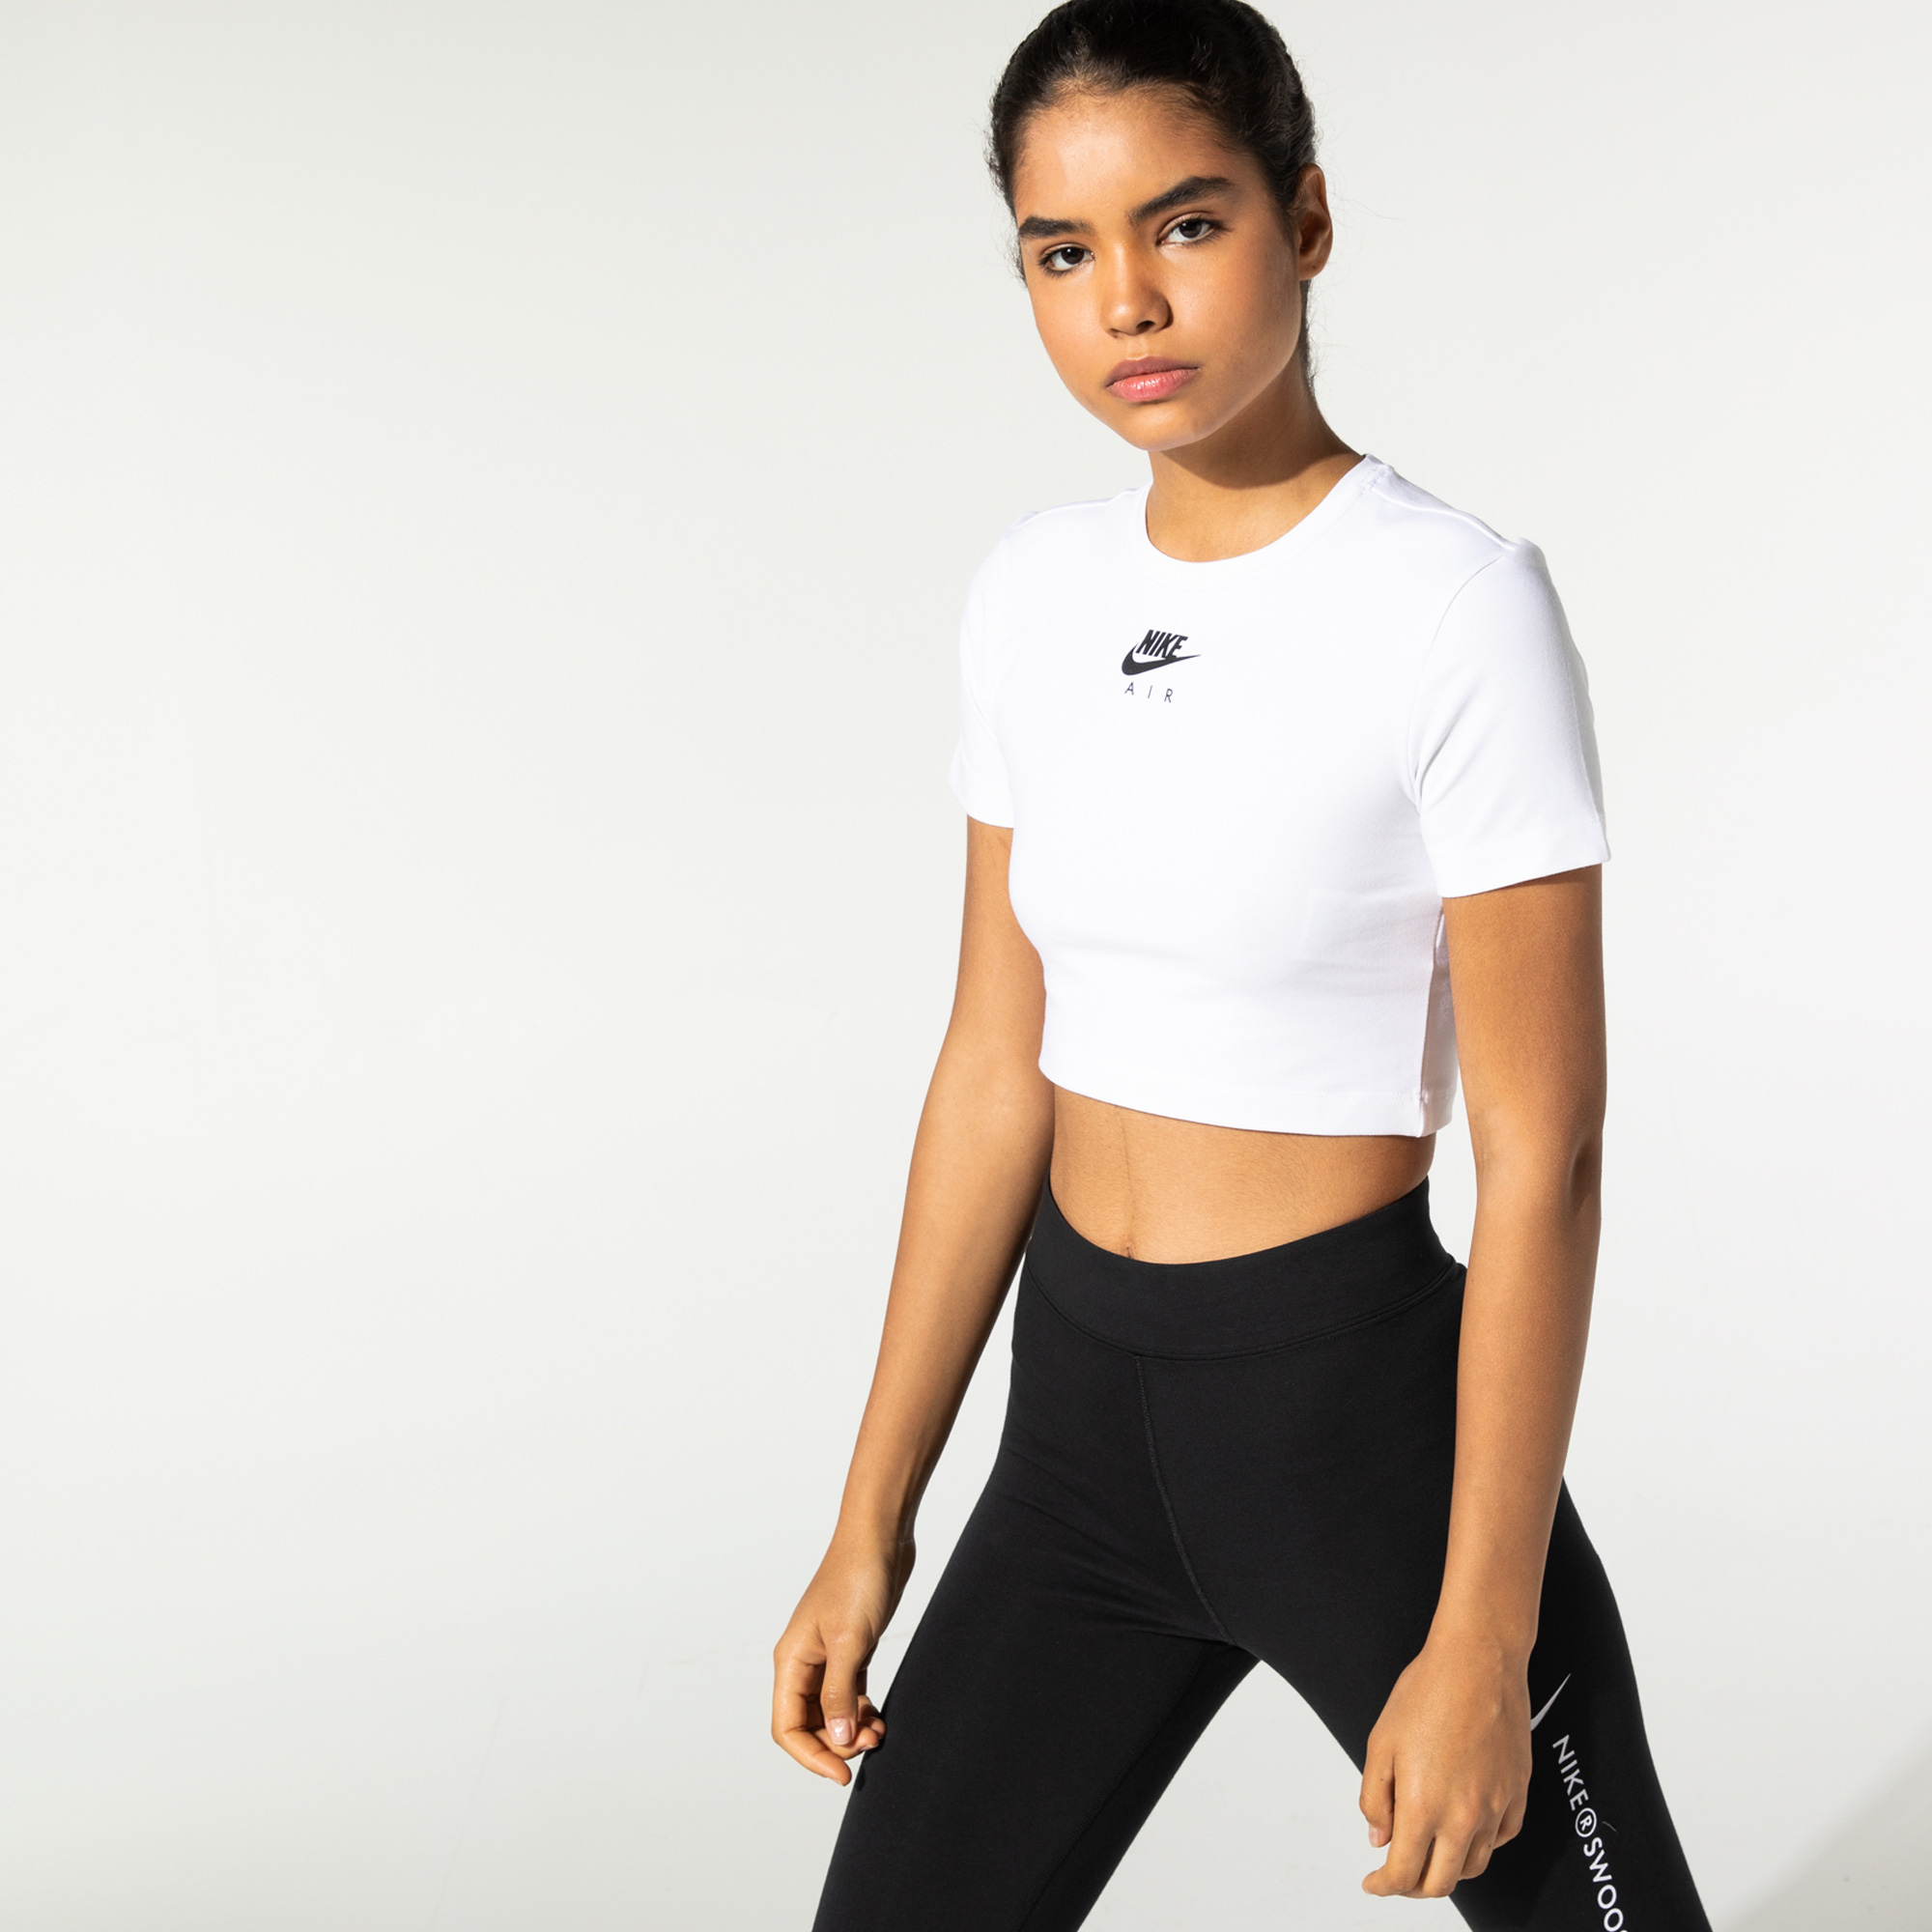 Nike Air Kadın Beyaz T-shirt